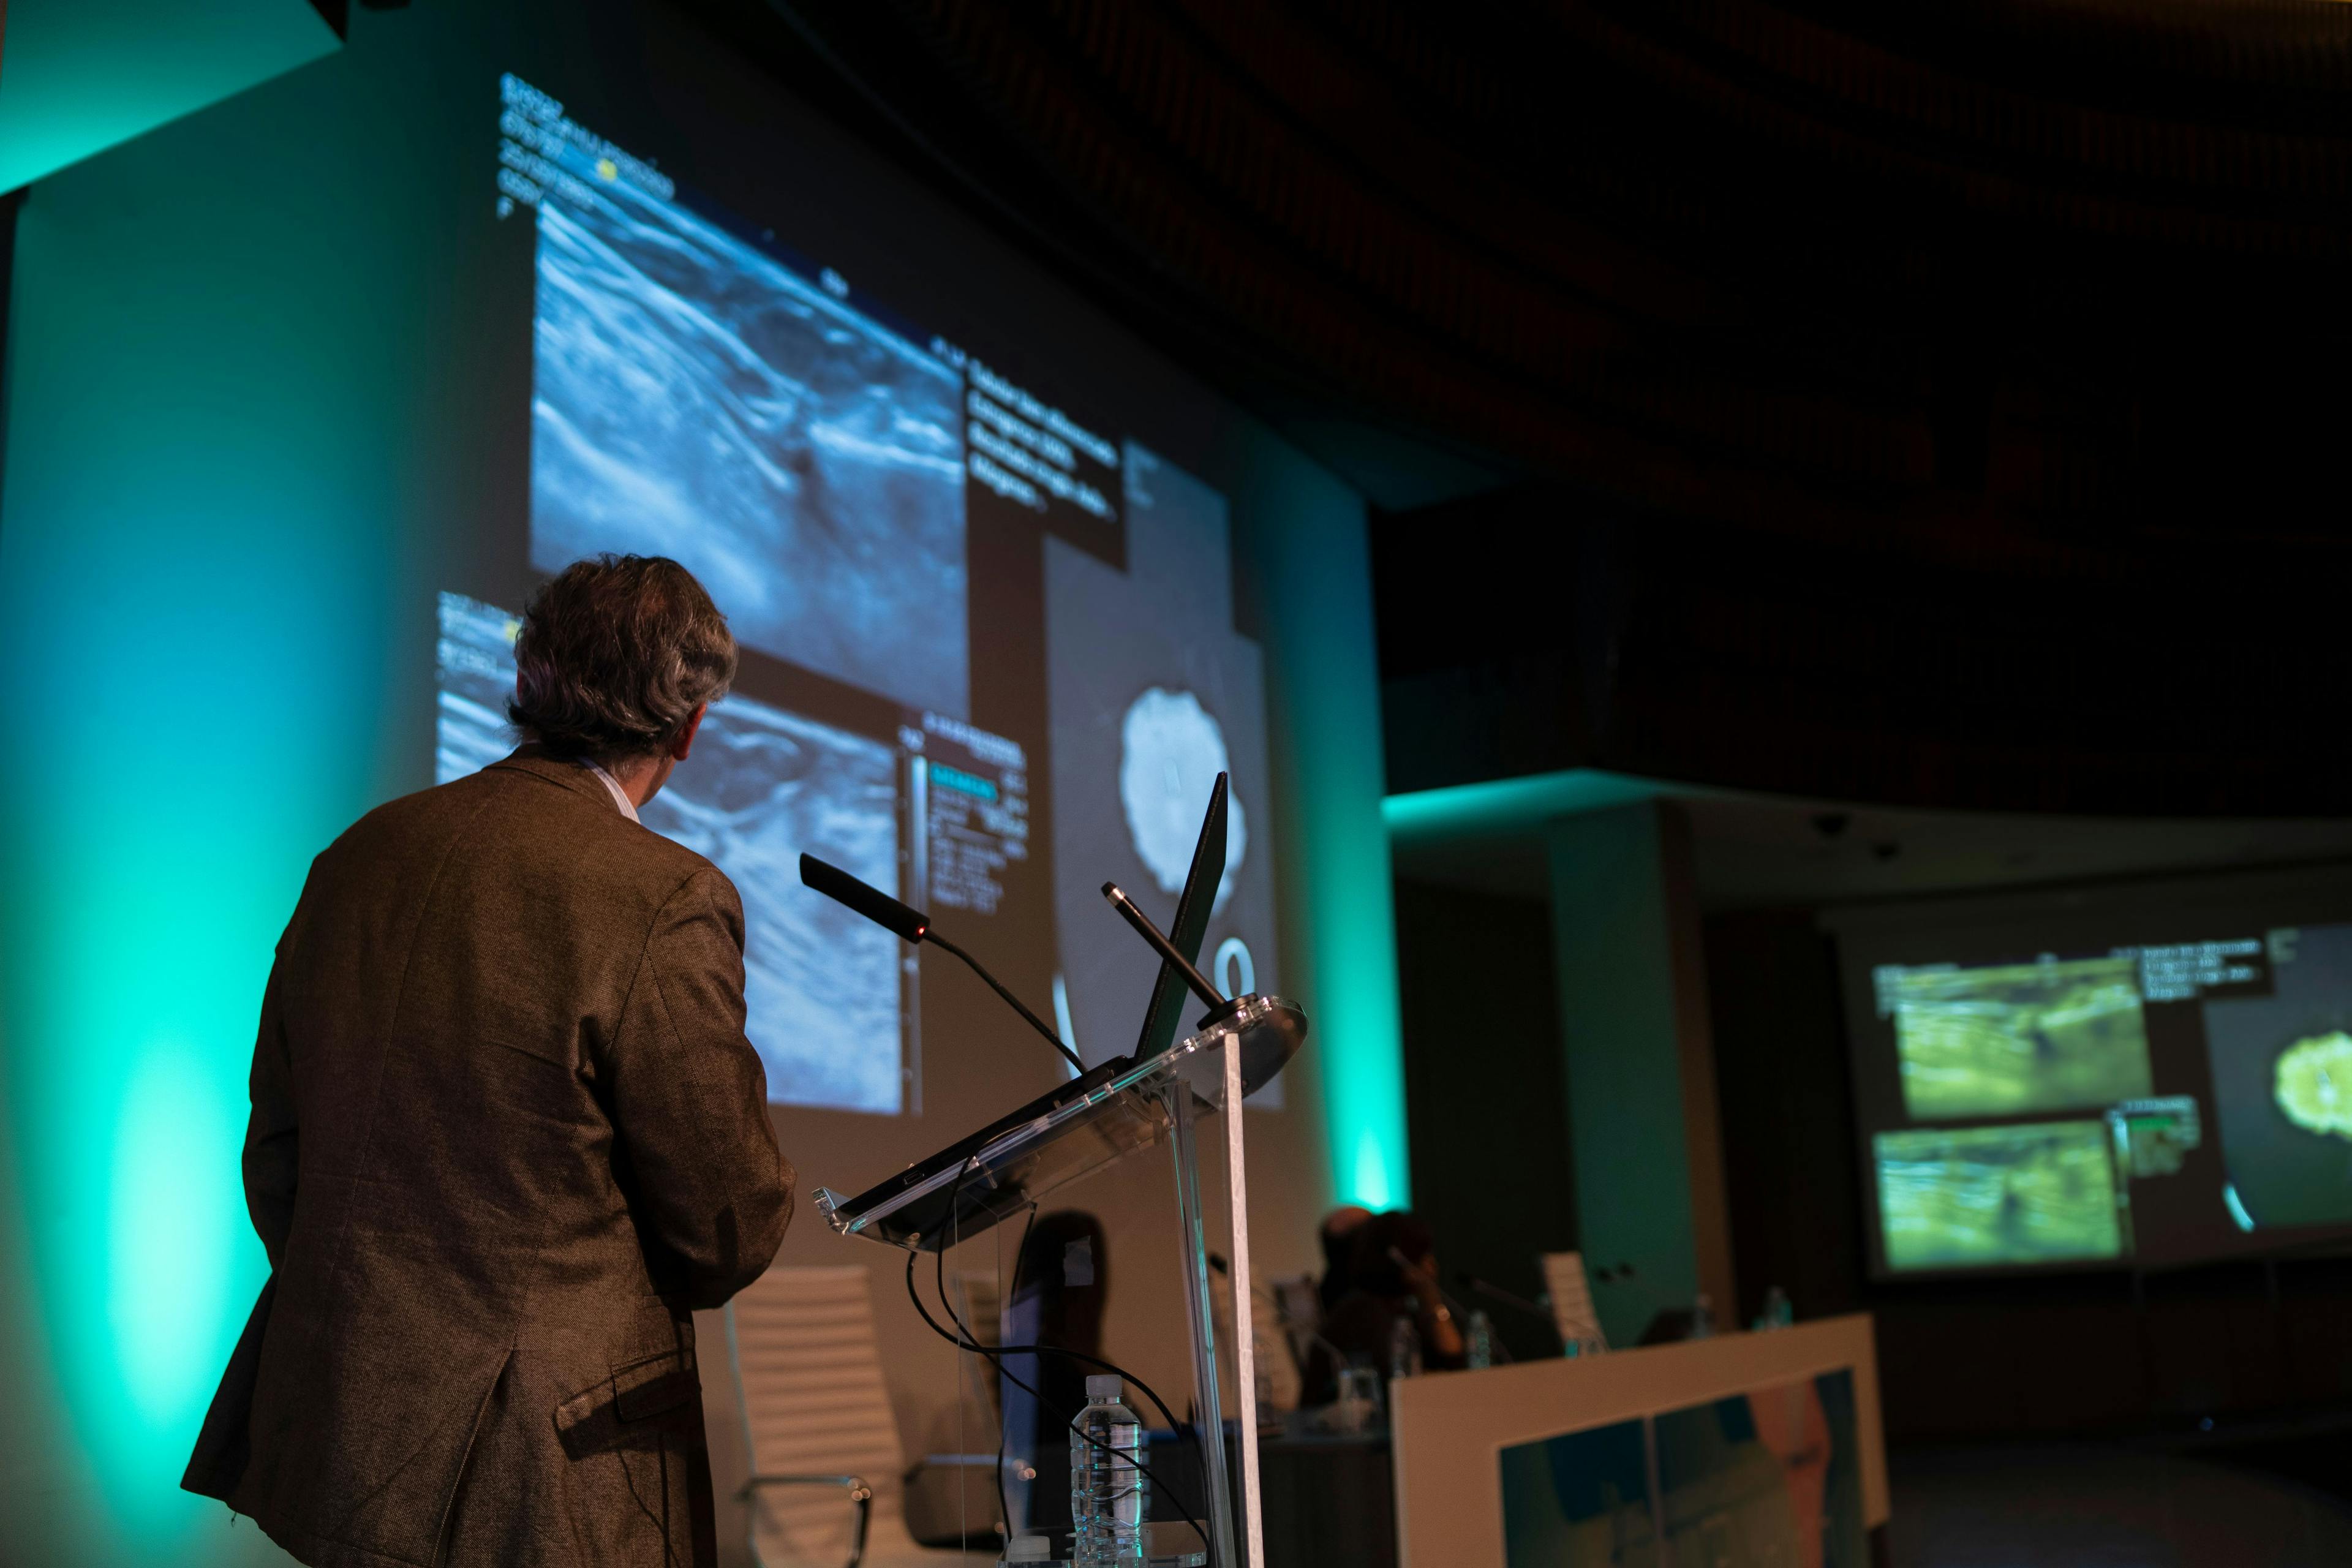 Presentation at medical conference -- Image credit: Aydan | stock.adobe.com